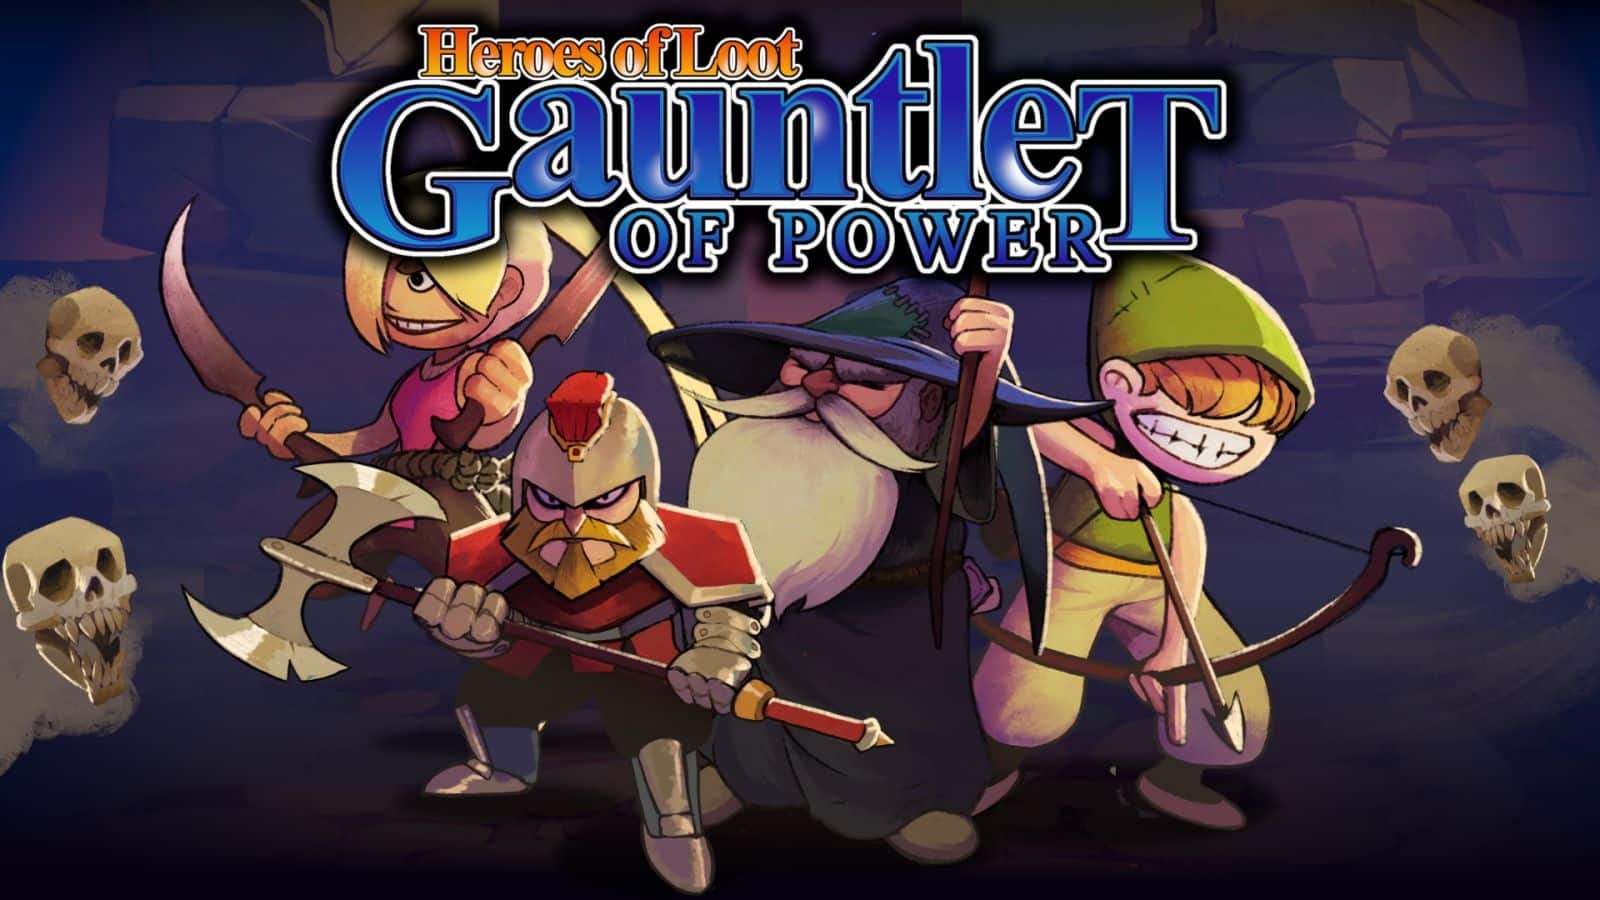 Heroes of Loot: Gauntlet of Power : le dungeon crawler confirmé sur PC